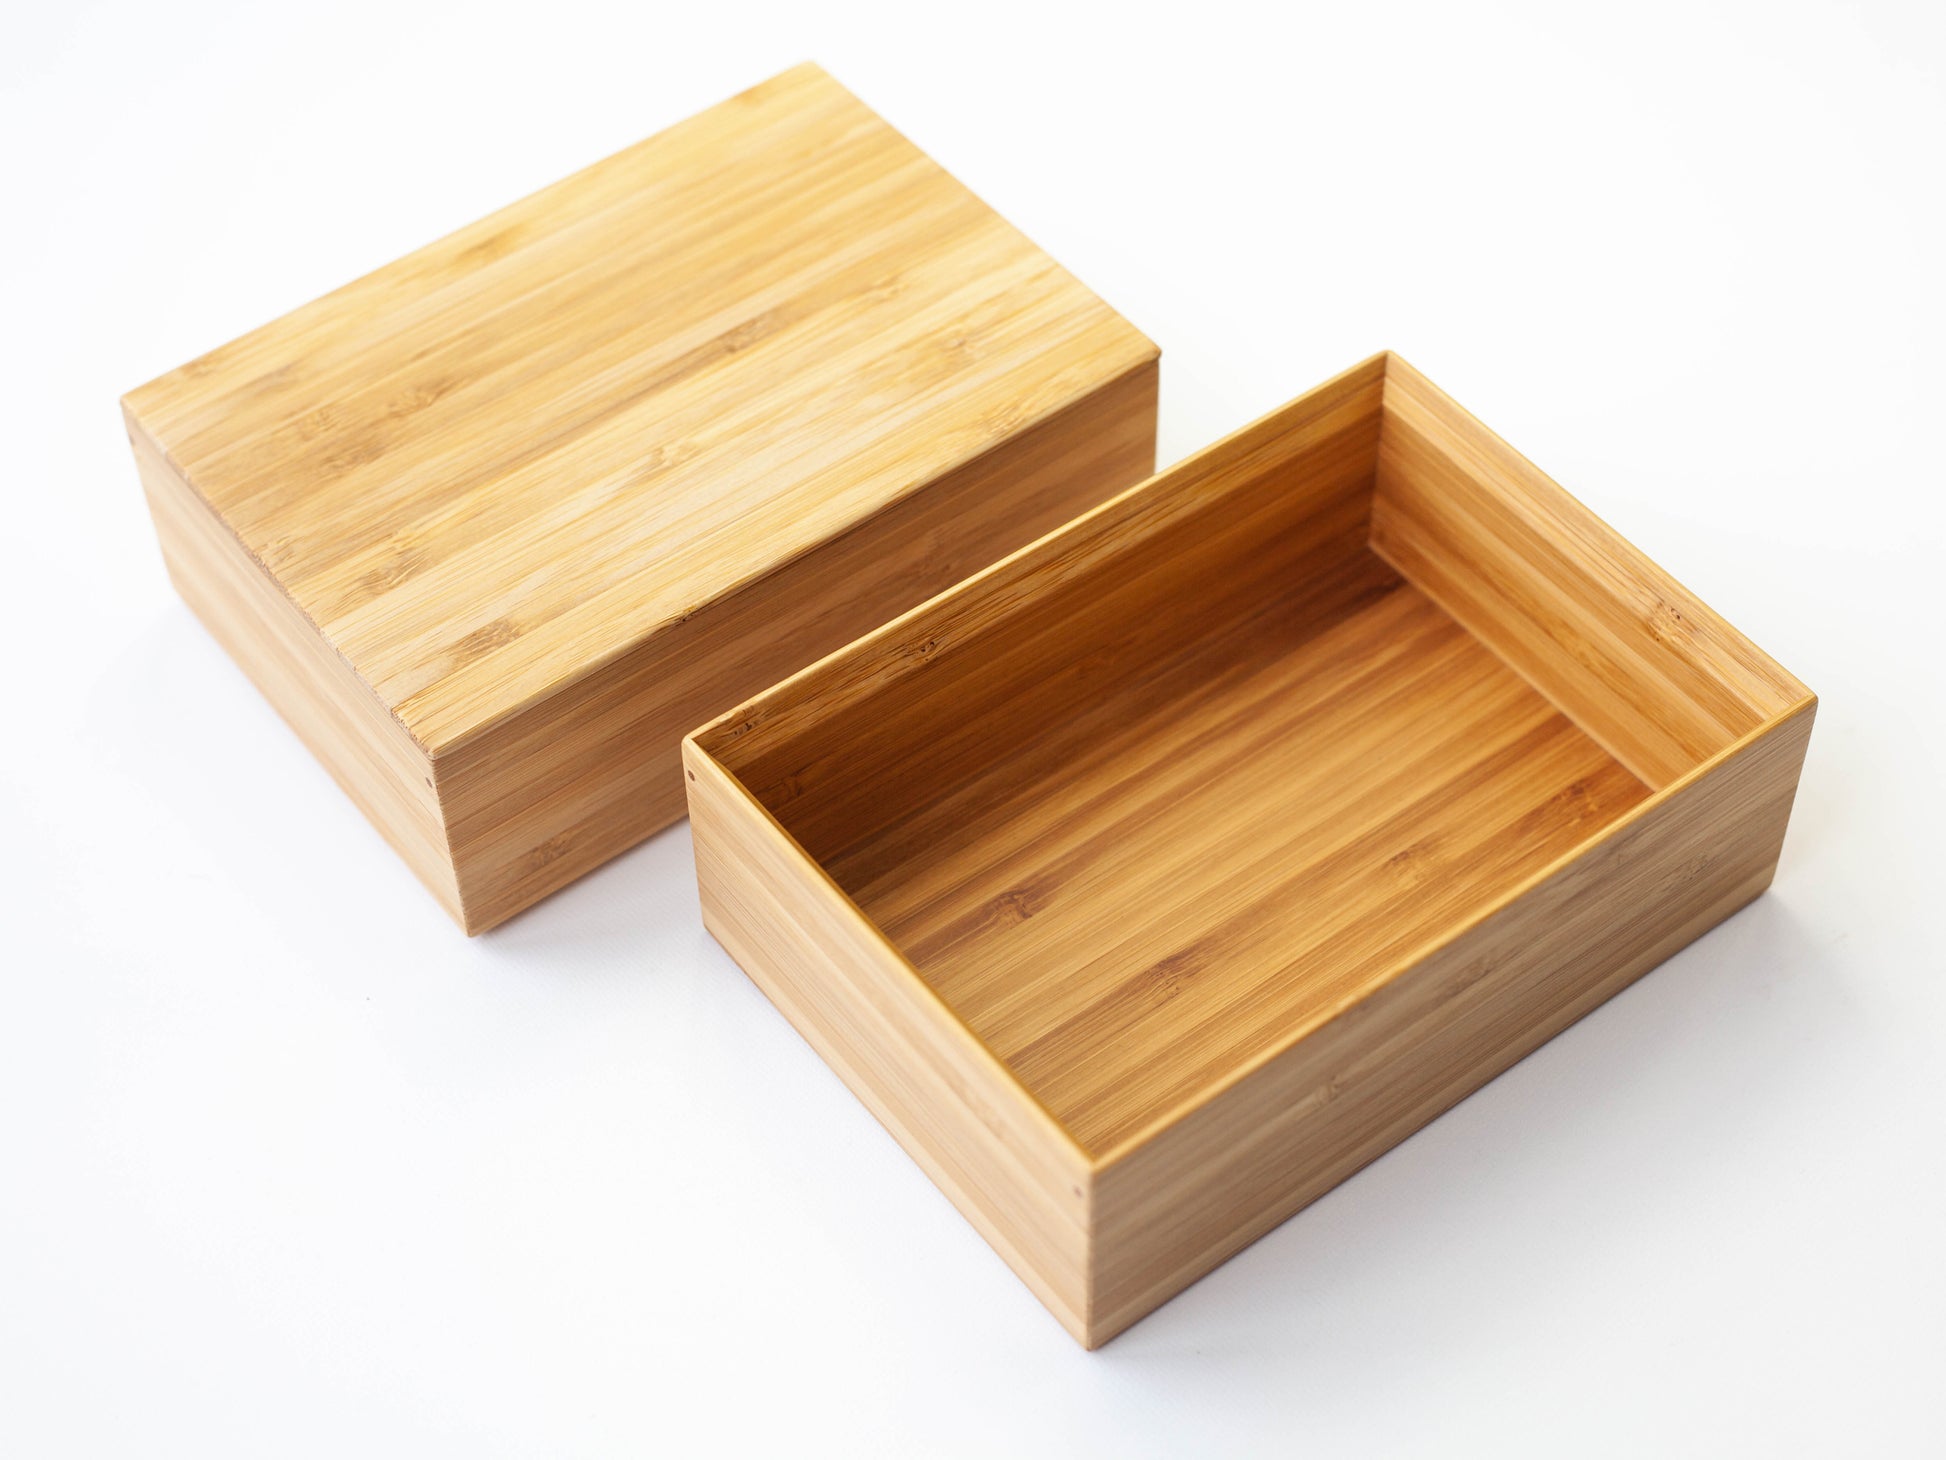 BENTO BOX - Traditional Handmade Lunch Box